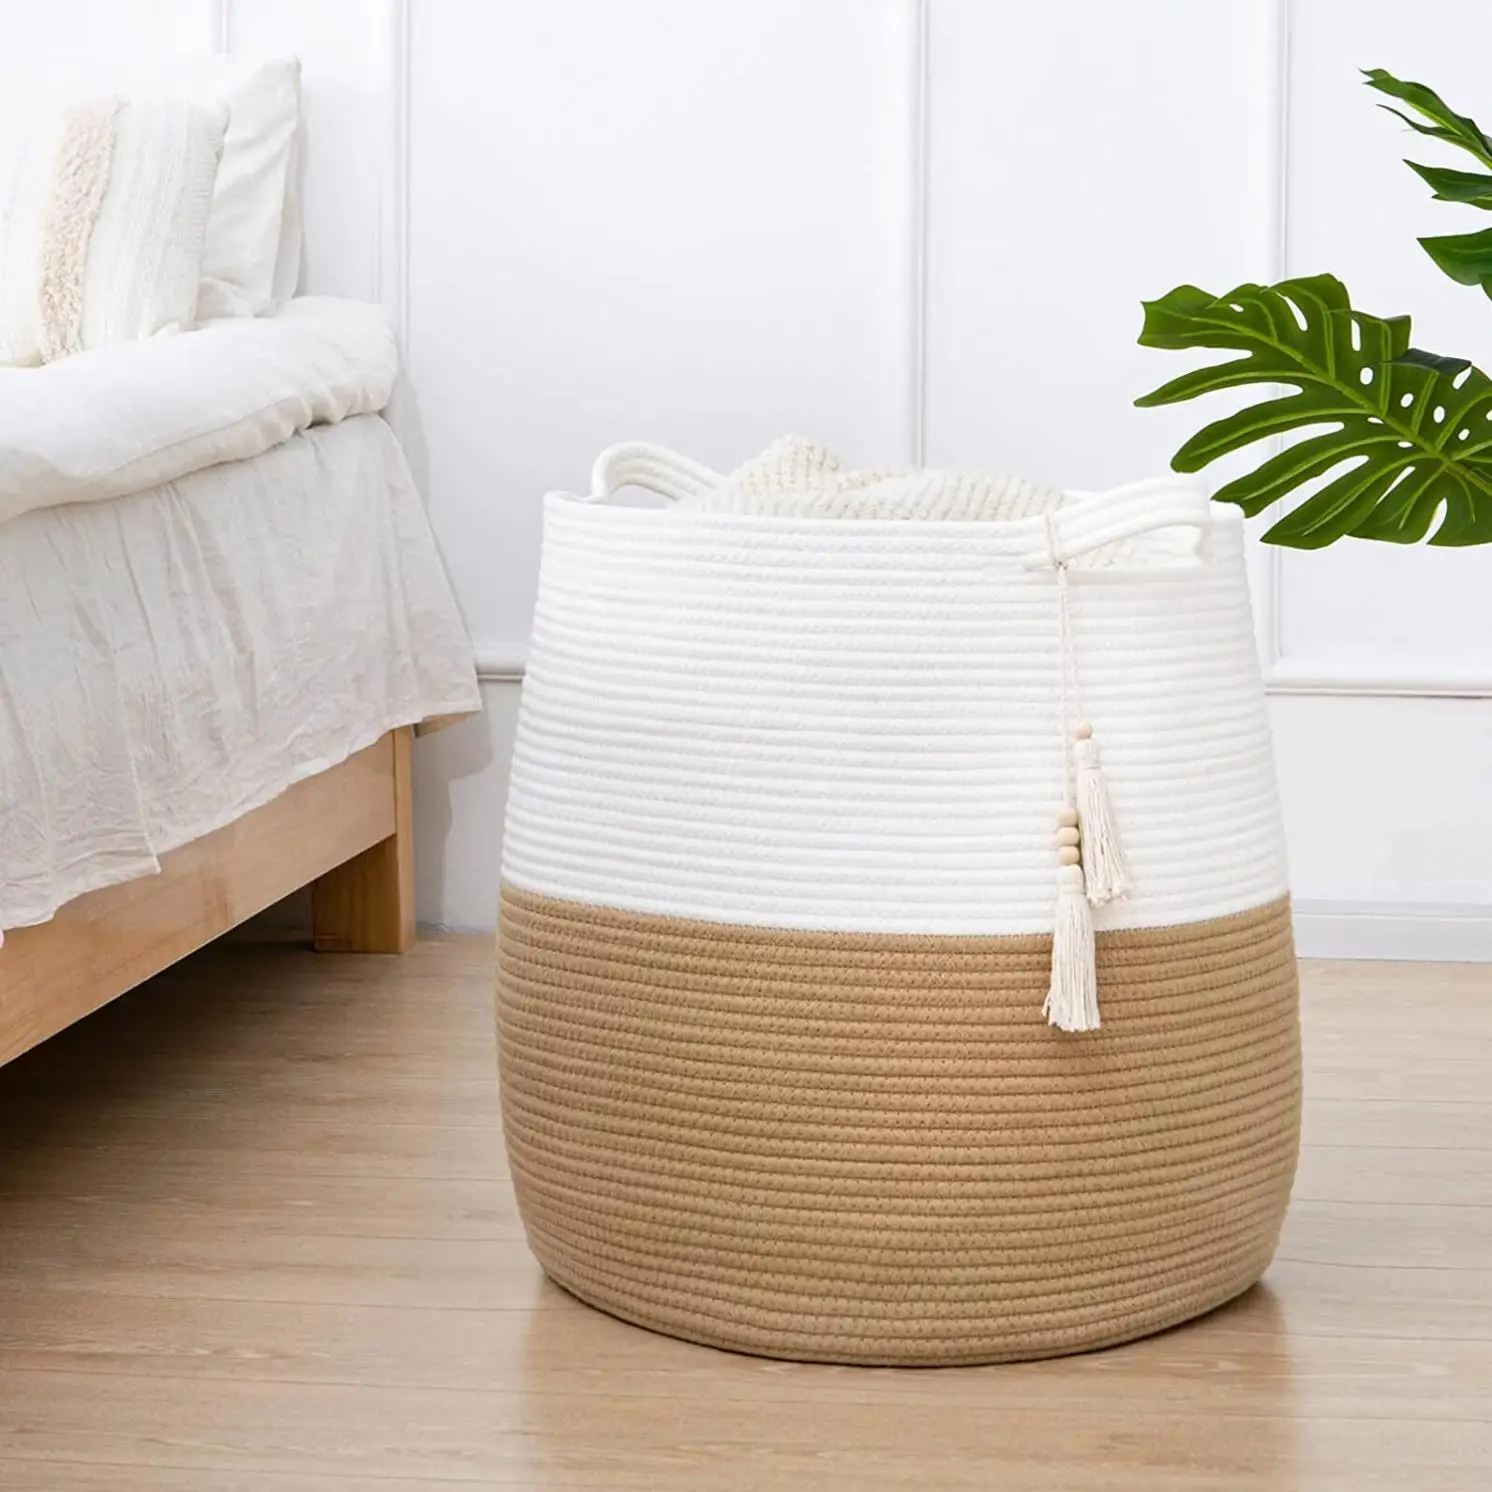 Woven Rope Storage Basket for Organizing, Boho Decorative Laundry Basket for Living Room, Round Basket for Towels, Toys